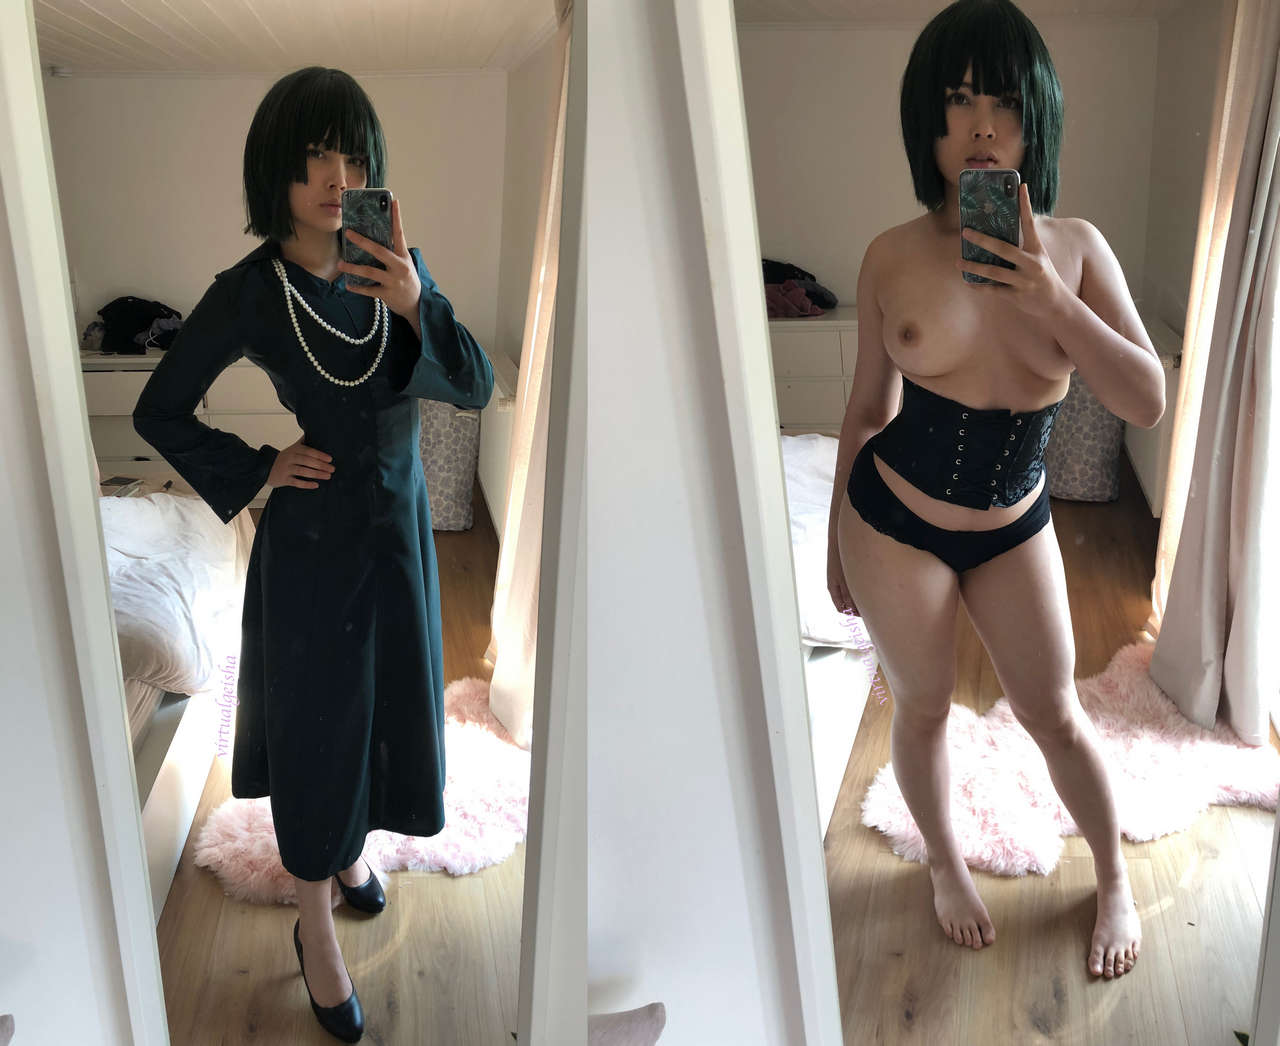 Fubuki Mirror Selfies By Virtual Geish